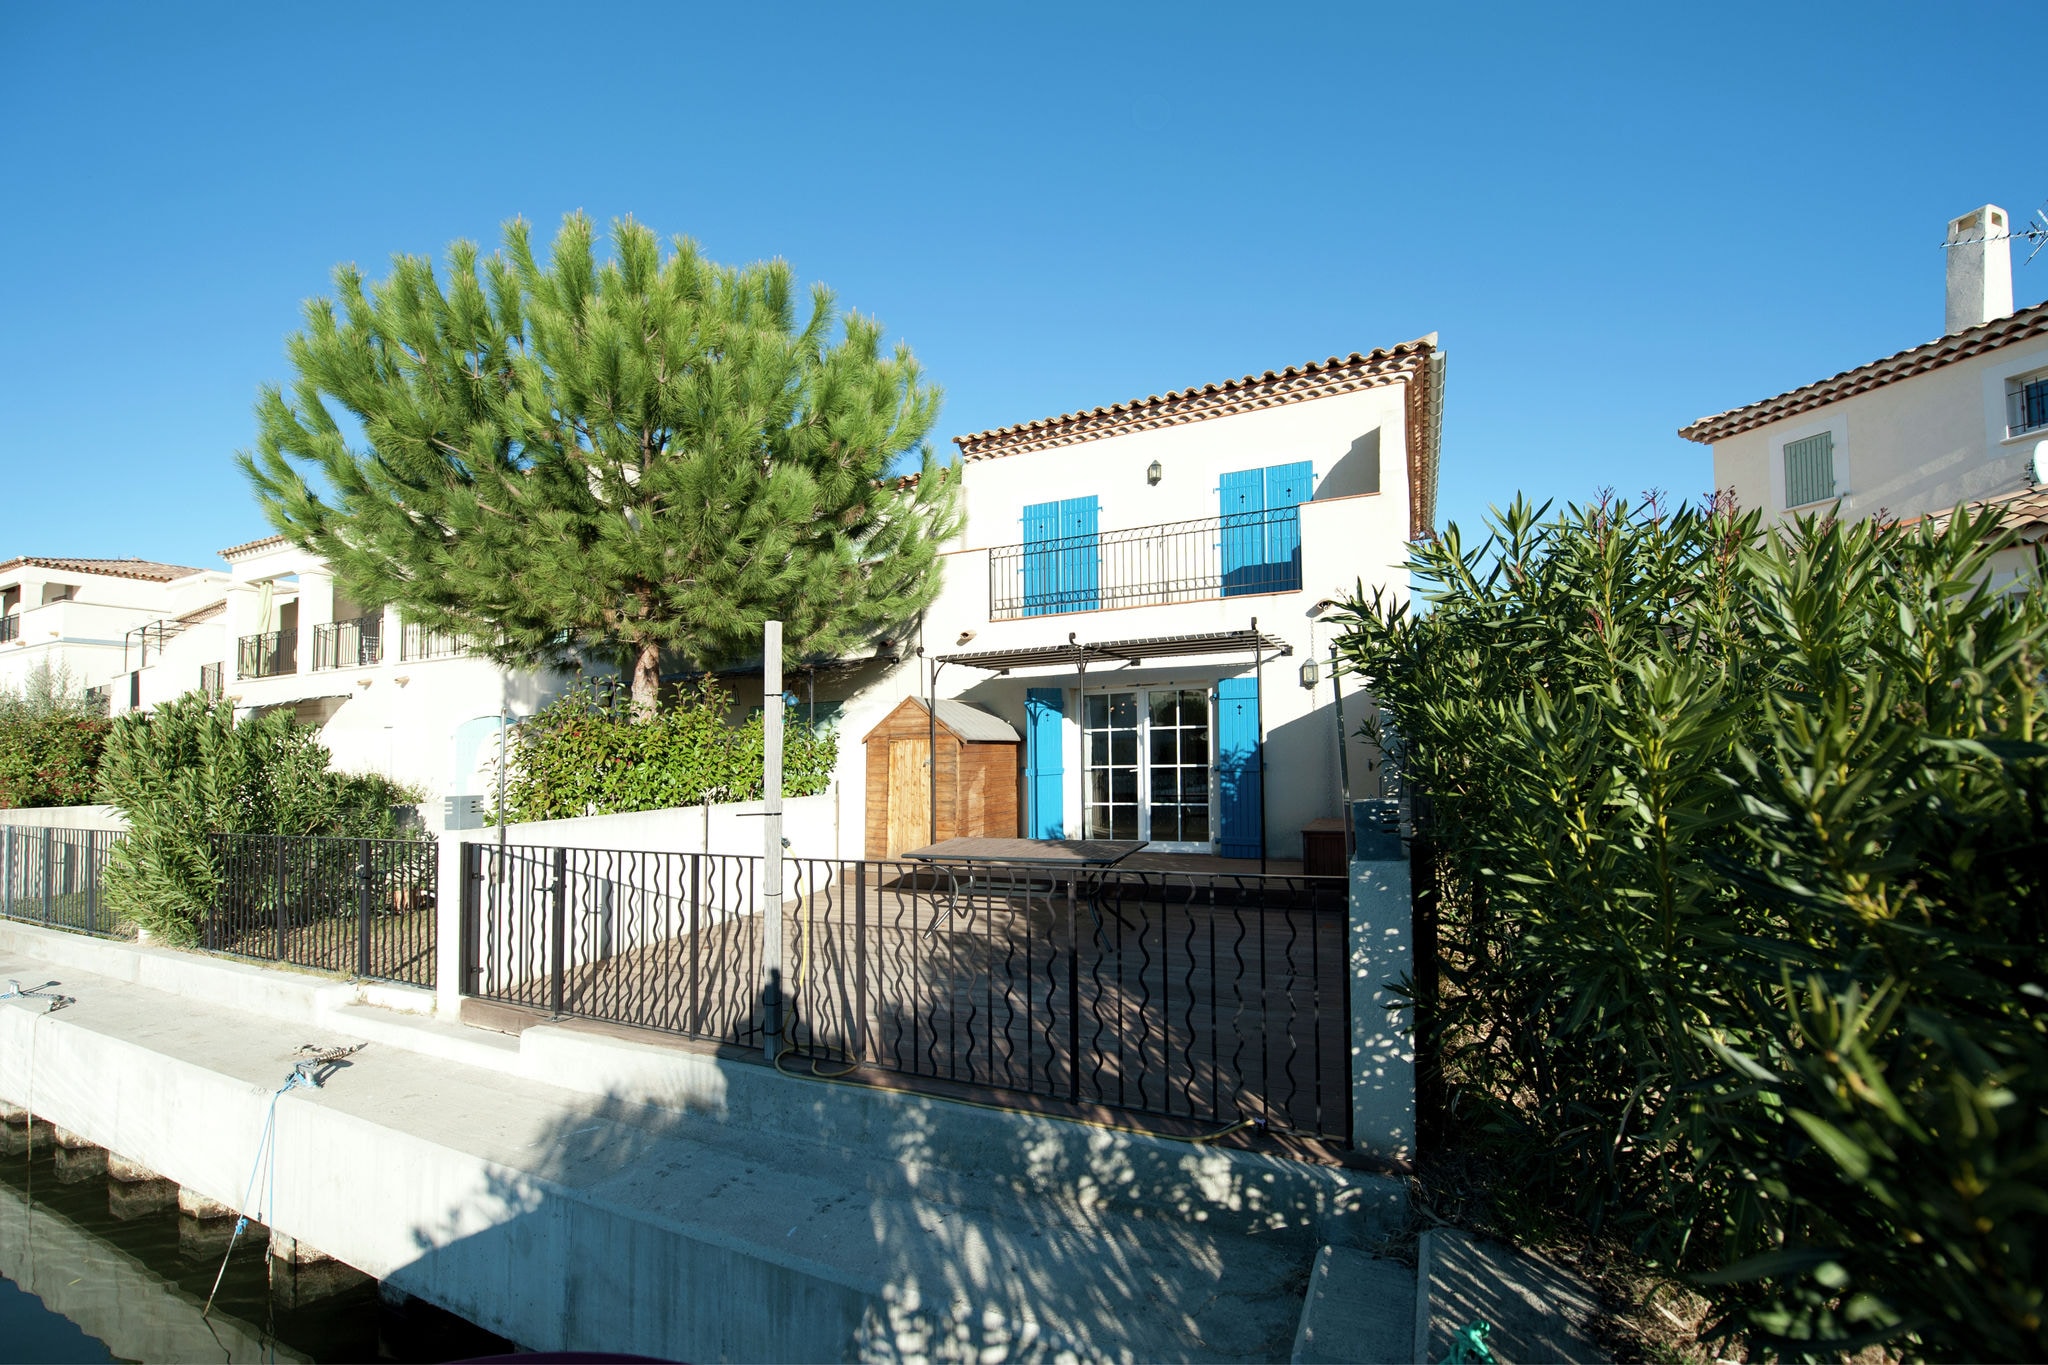 Villa mit Balkon & Terrasse in Meeresnähe in Aigues Mortes